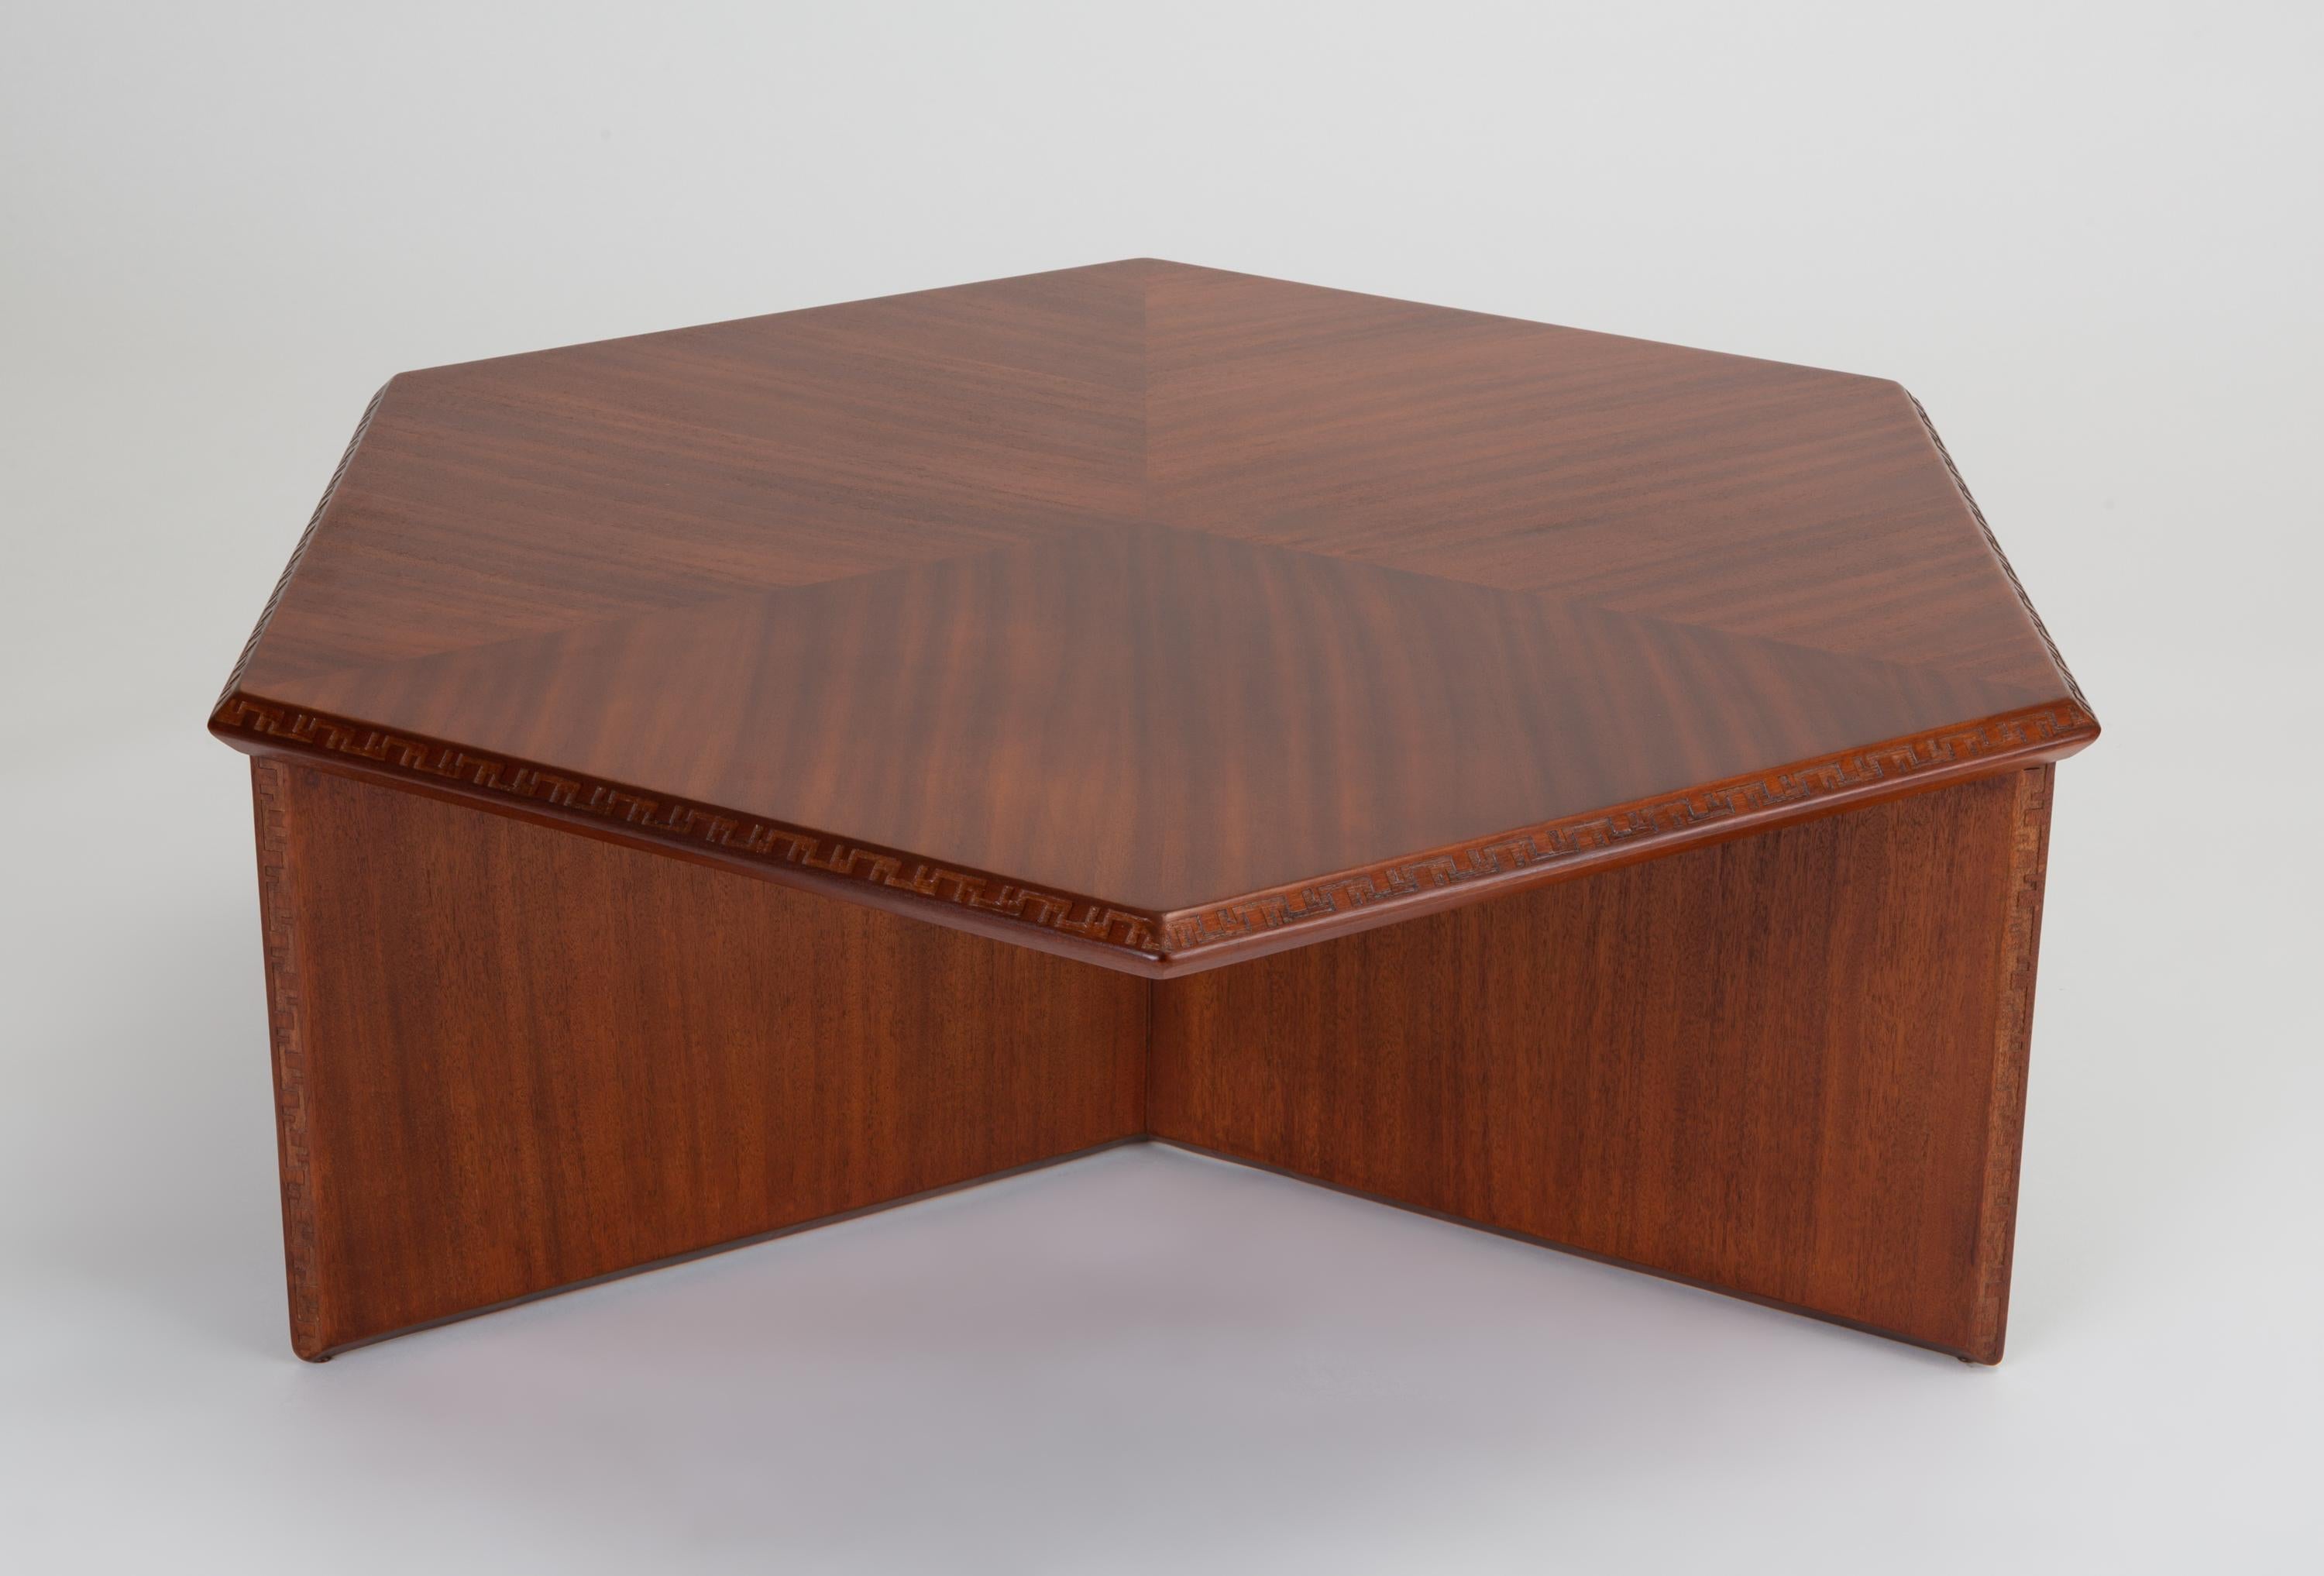 American Frank Lloyd Wright “Taliesin” Coffee Table for Heritage-Henredon